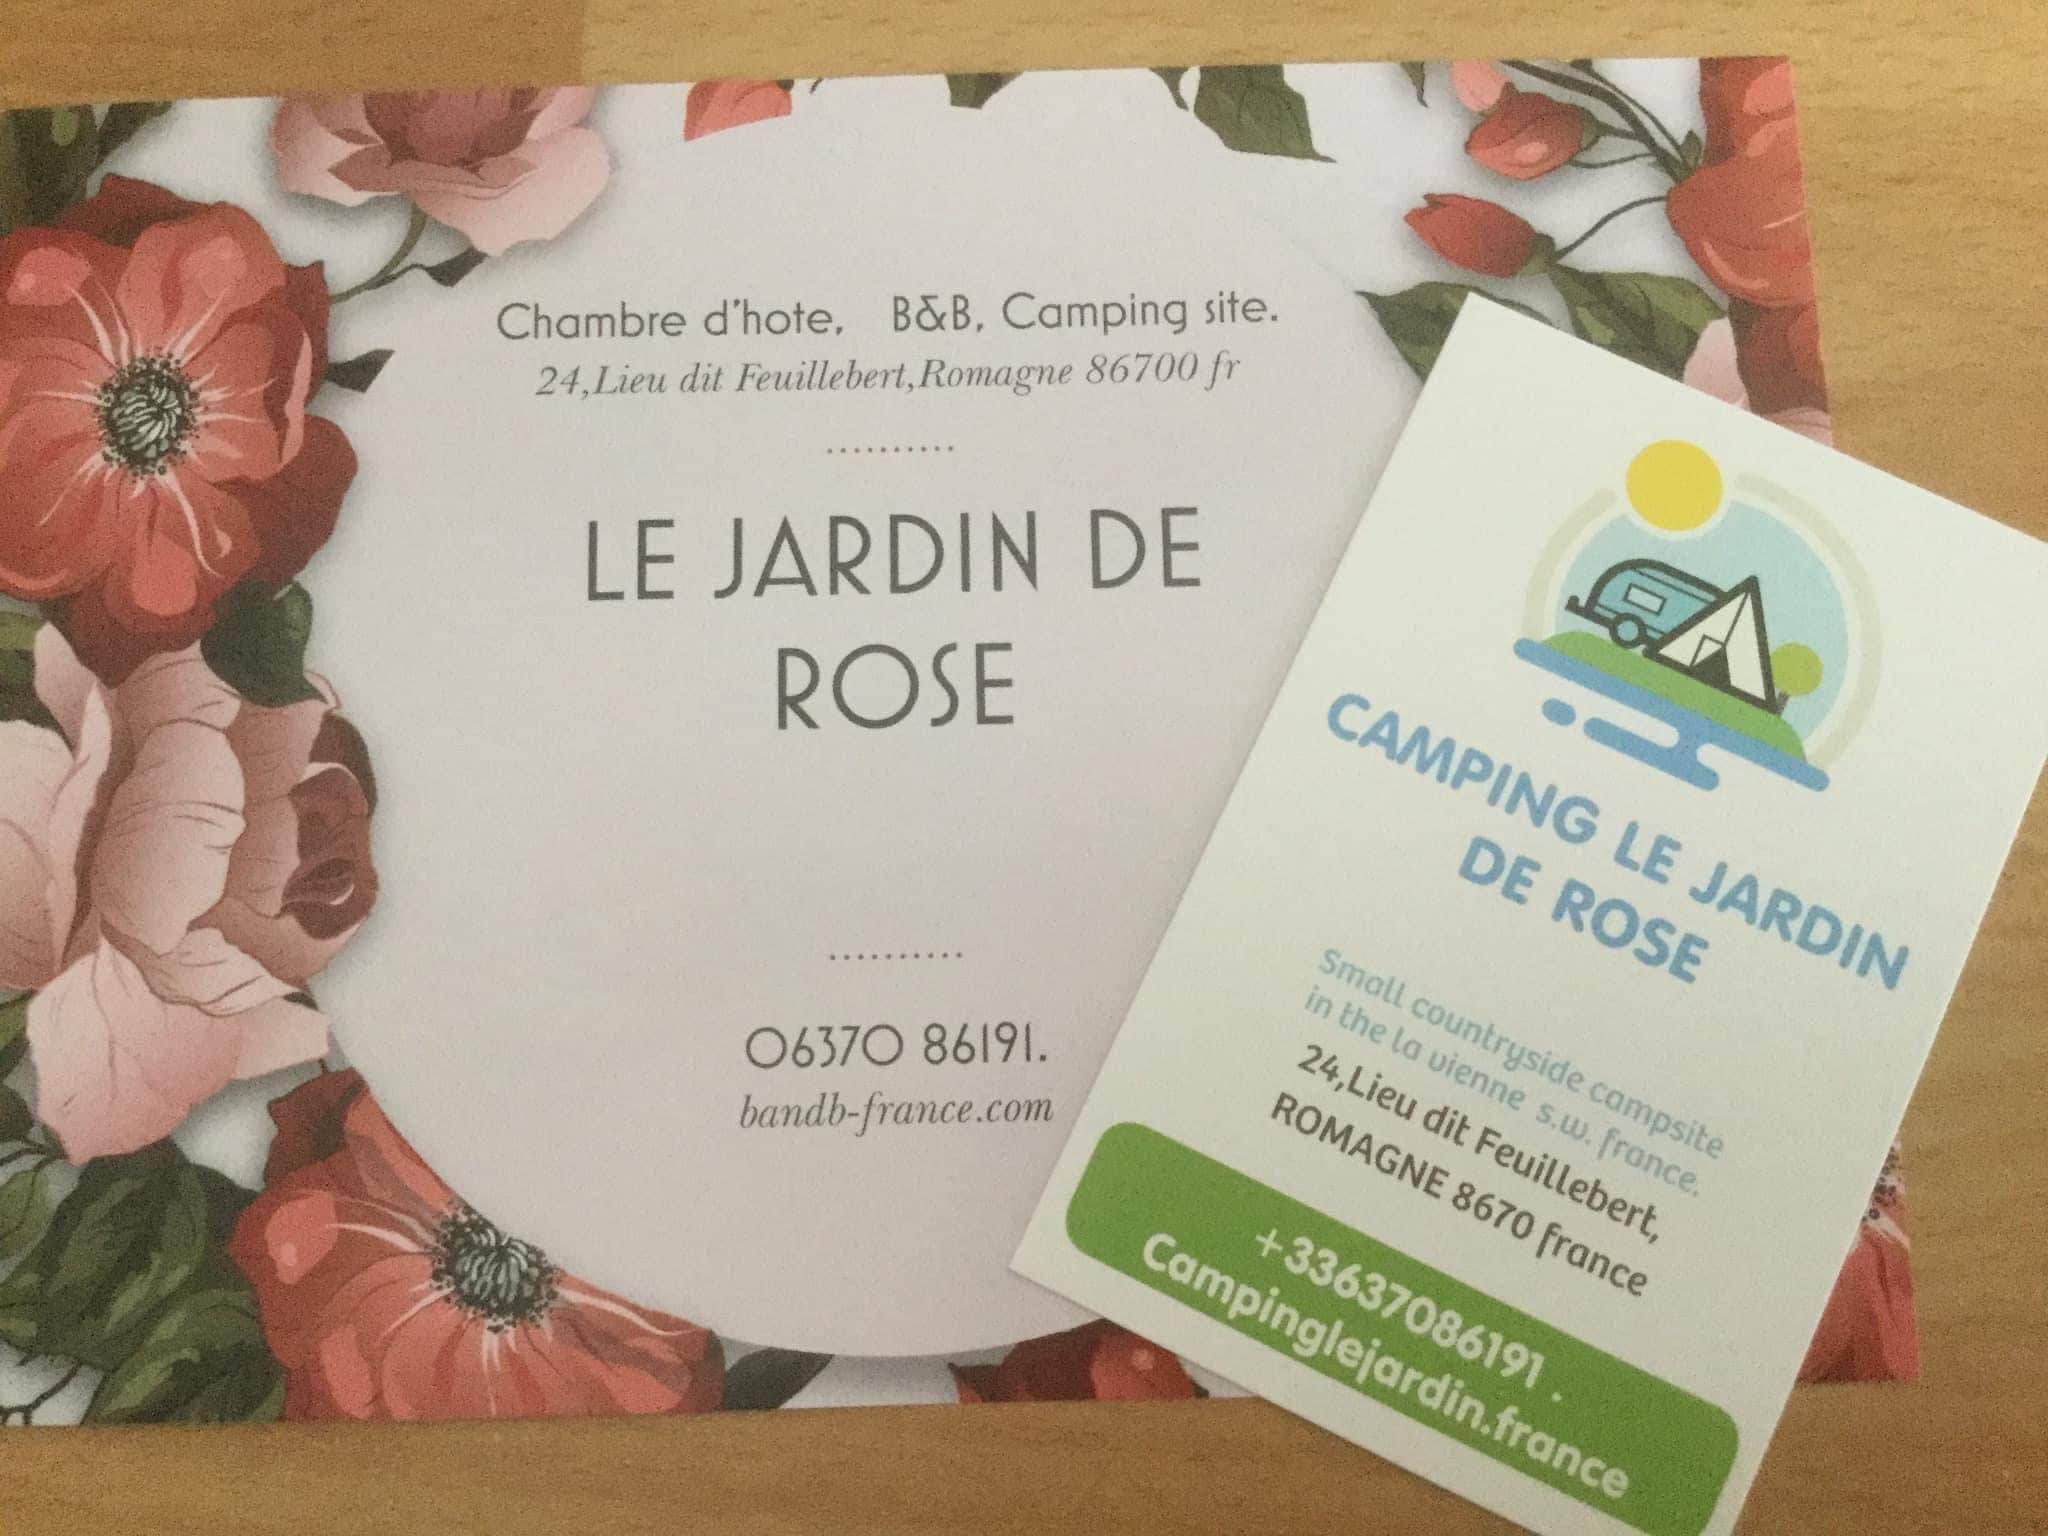 Le Jardin De Rose – B&B in Romagne